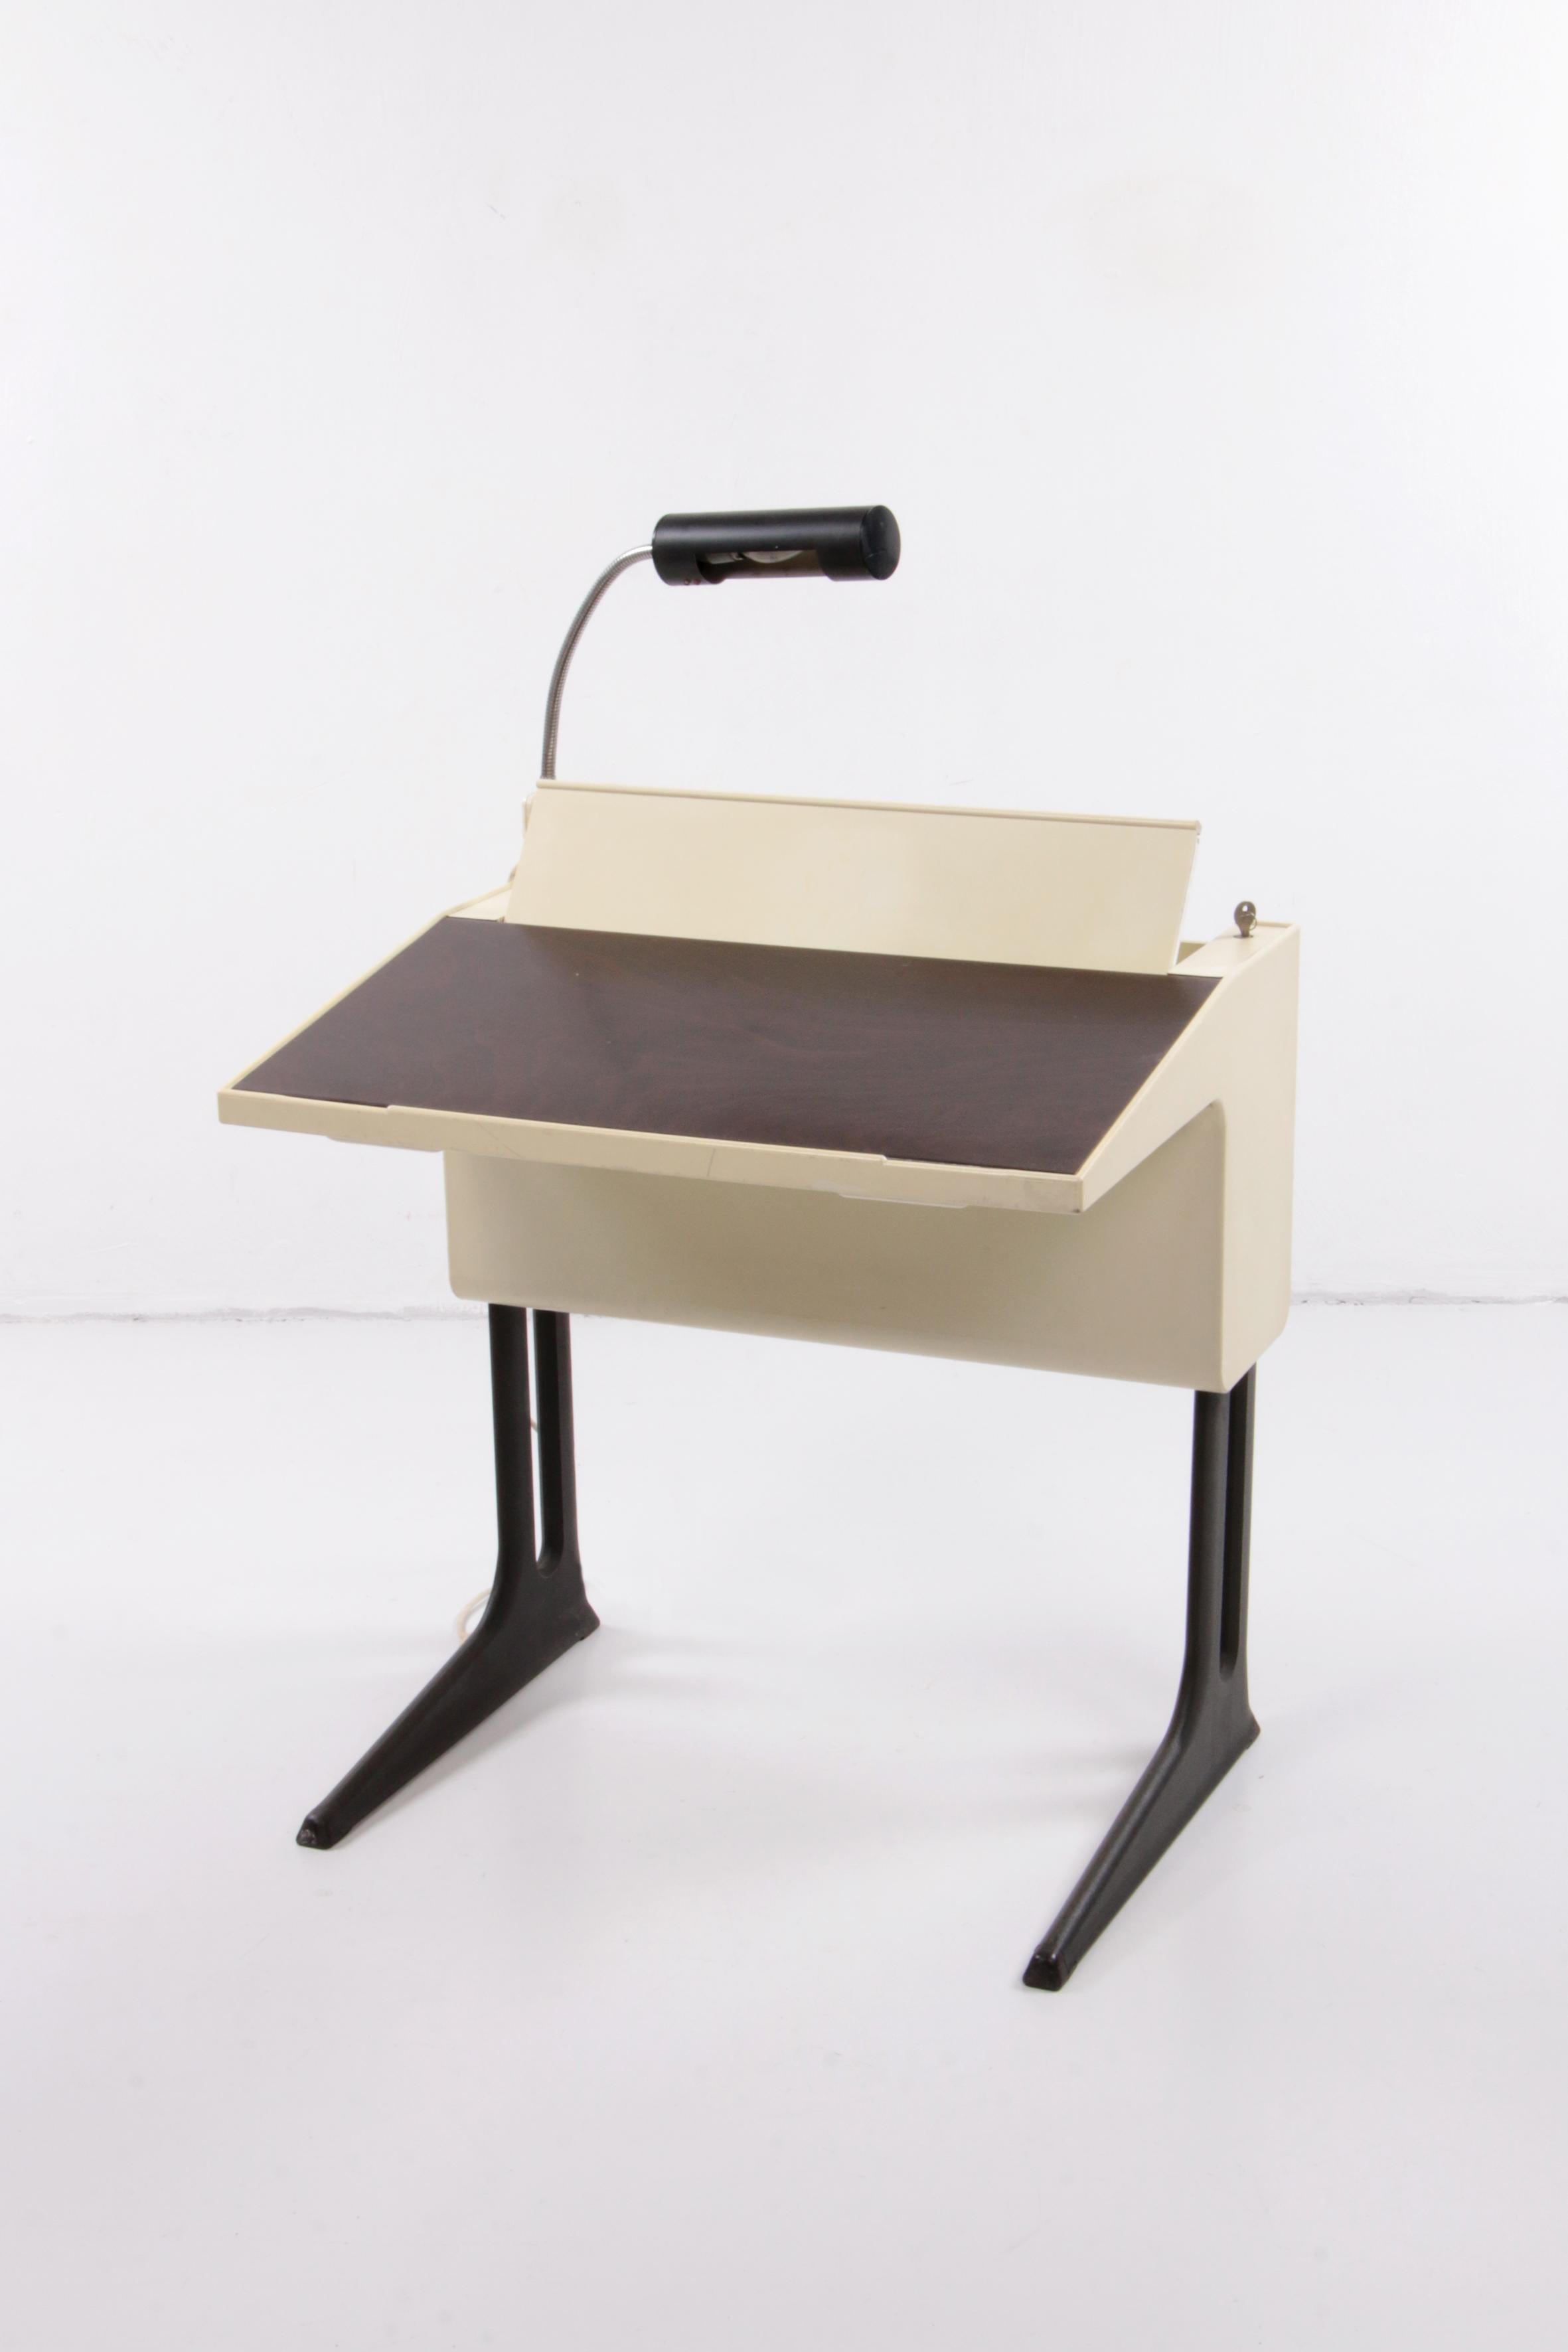 Late 20th Century Flötotto Adjustable Desk Design by Luigi Colani, 1970, Germany